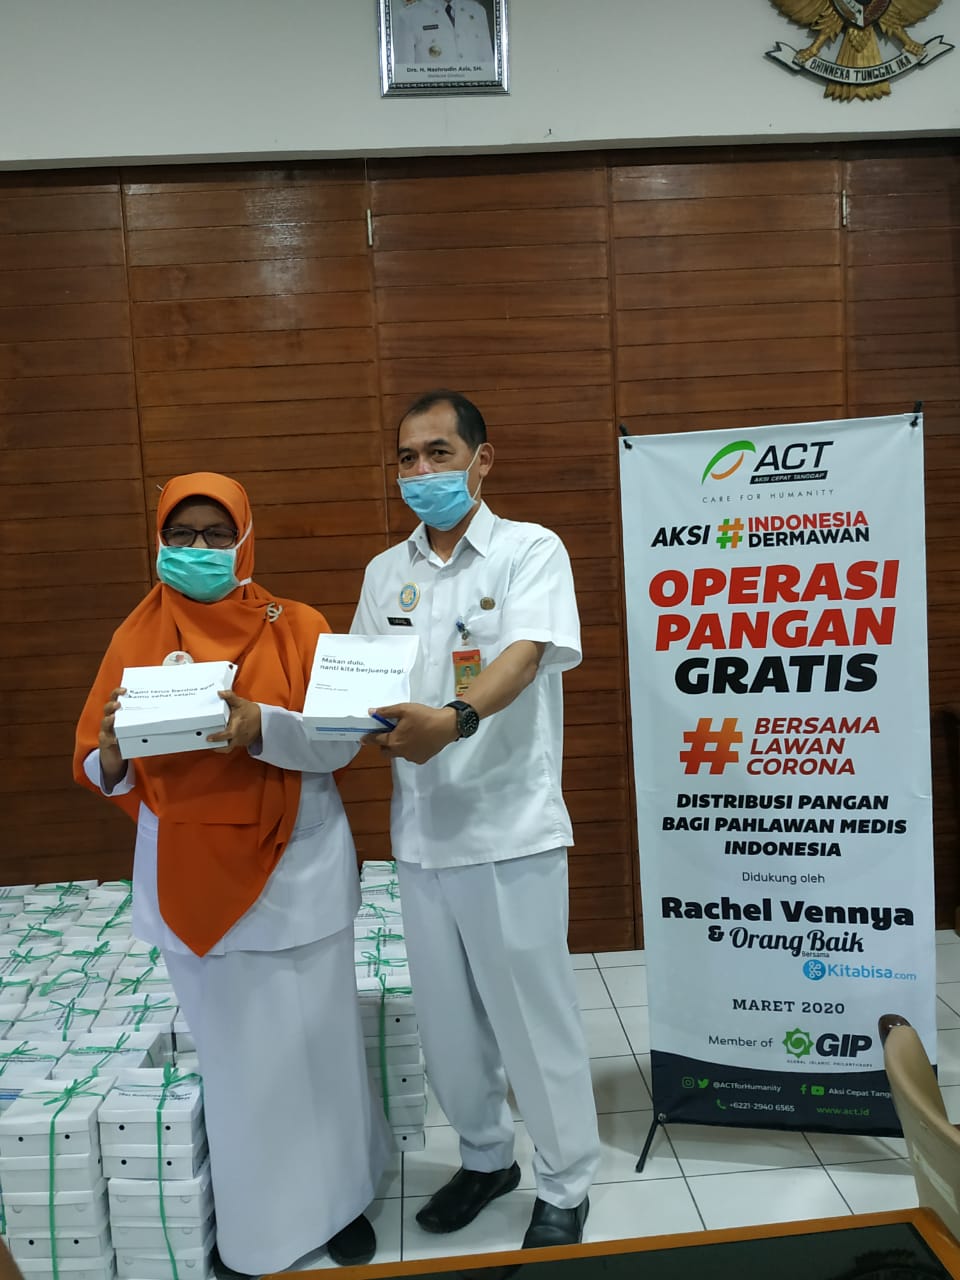 ACT Cirebon Distribusikan Makanan untuk Tim Medis Corona di RSD Gunung Jati